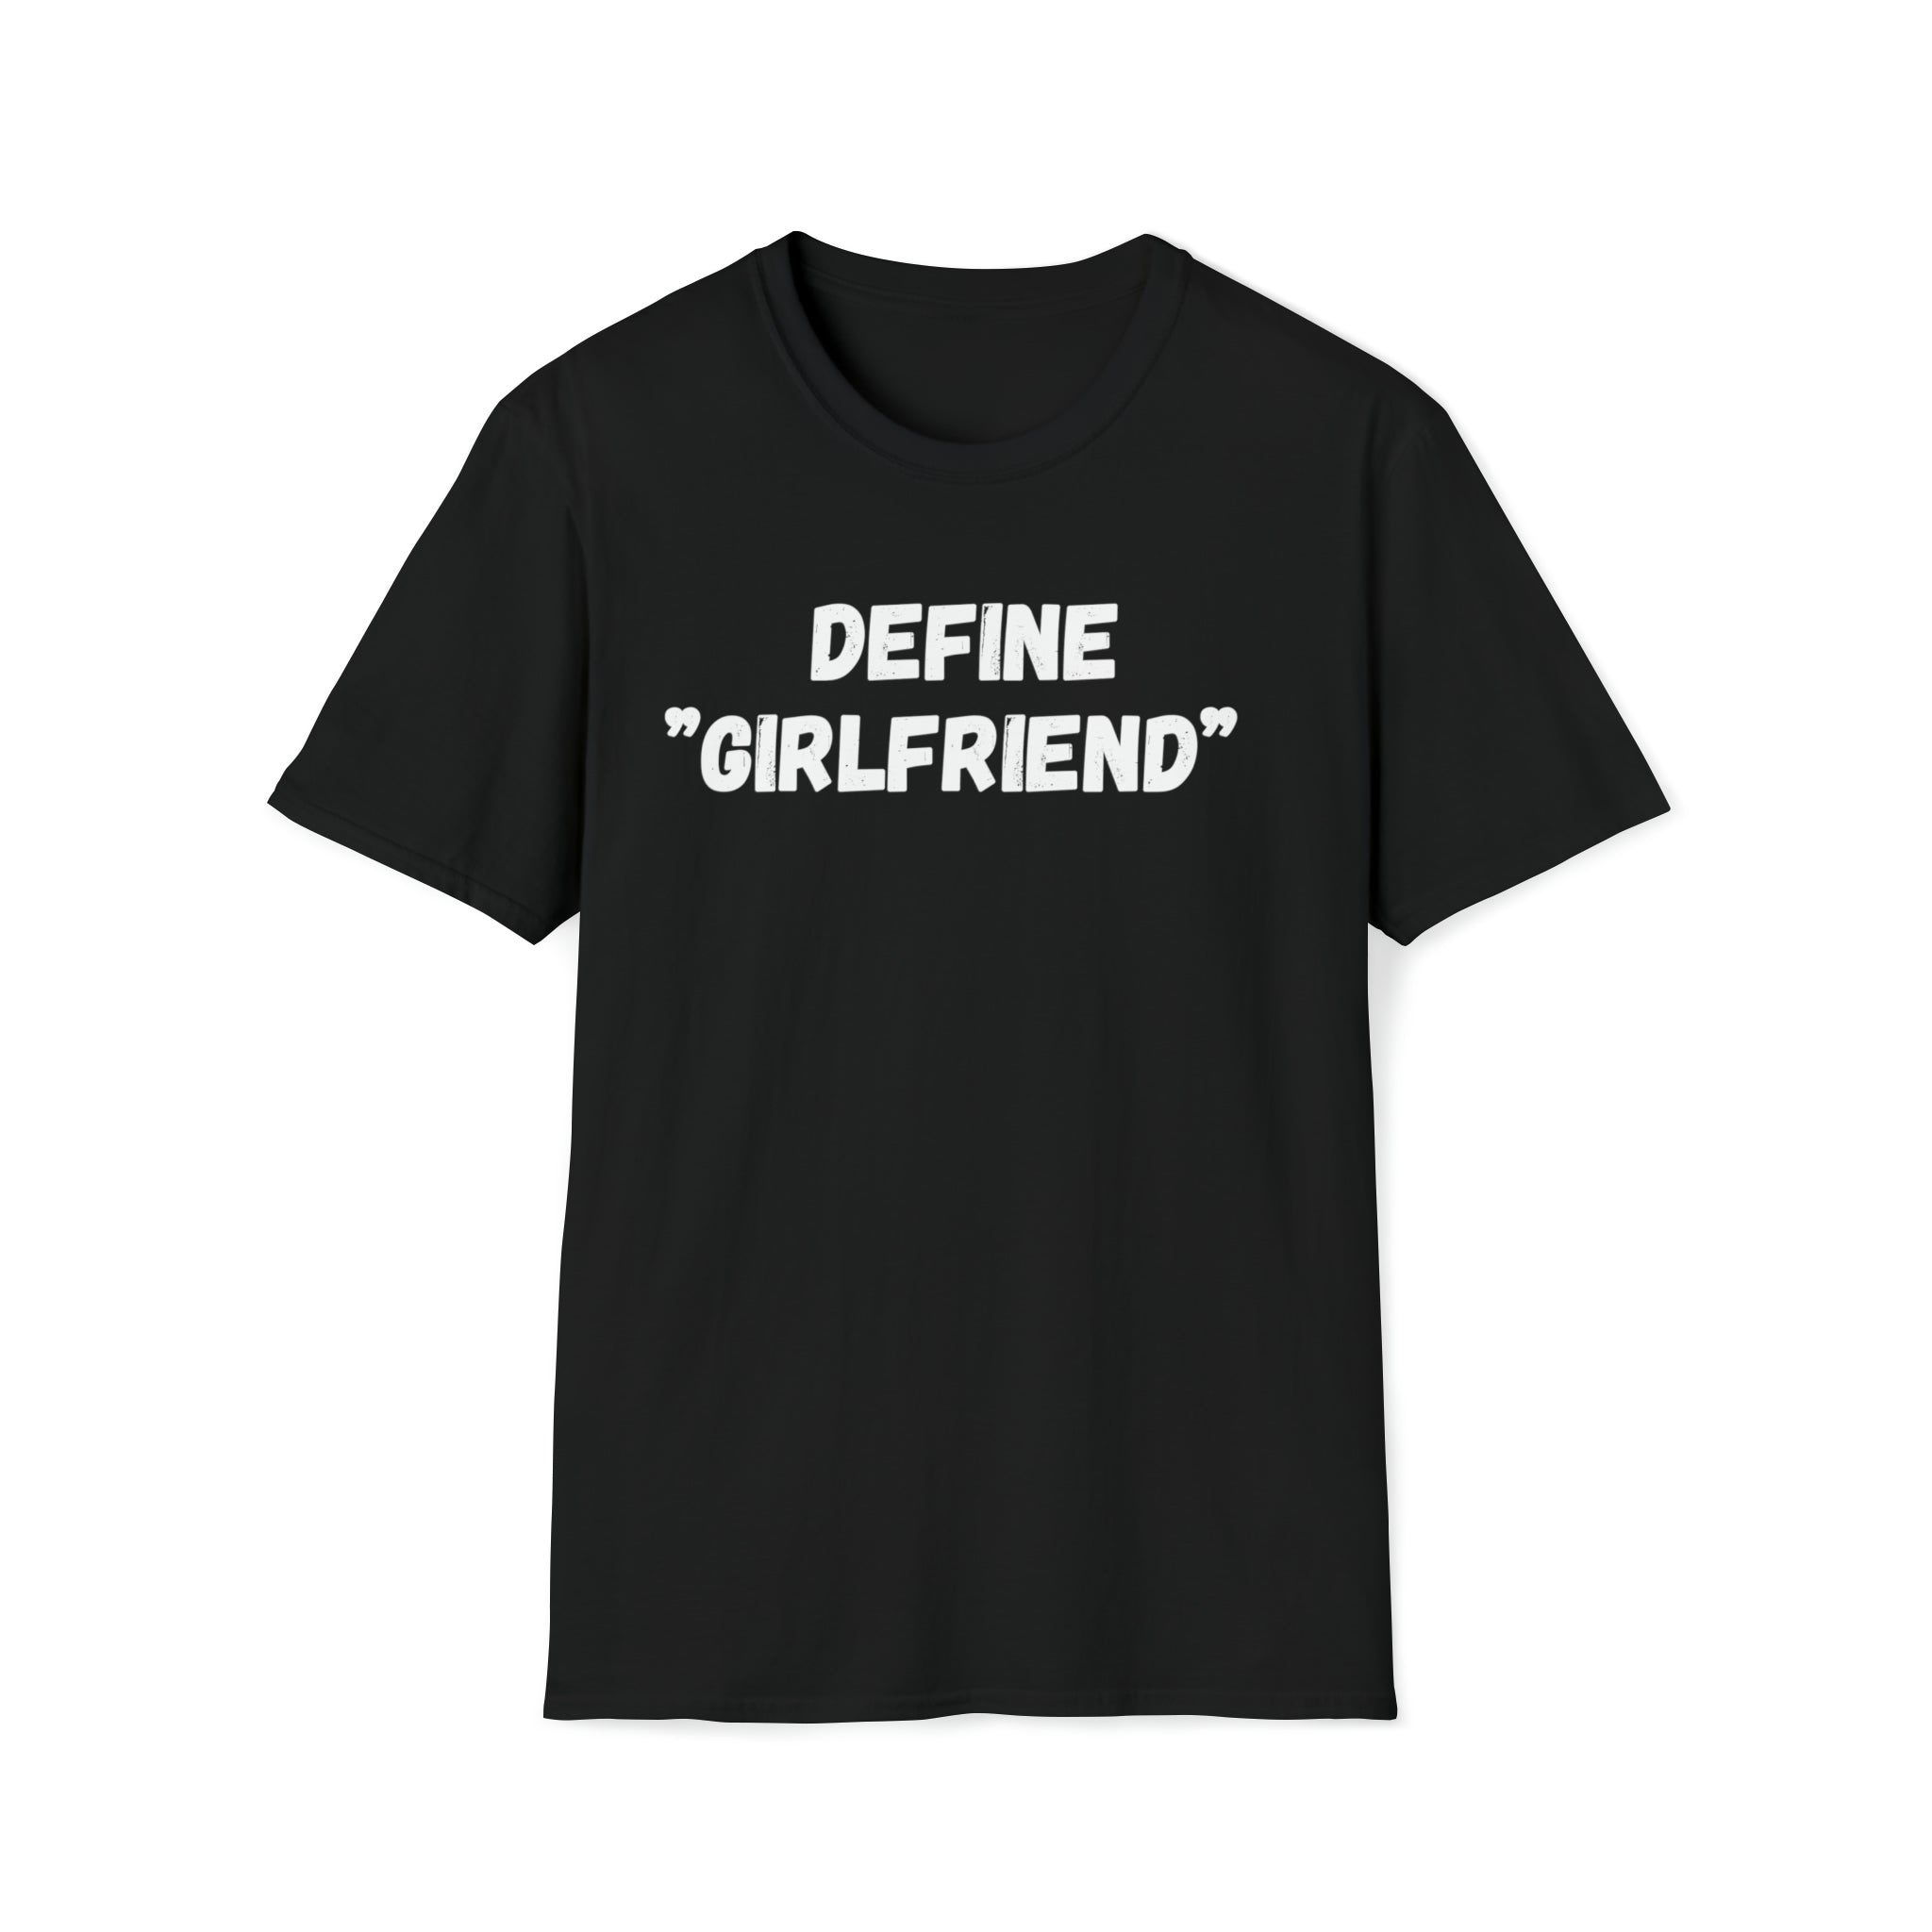 DEFINE GIRLFRIEND T-shirt, Black Tee, Funny shirt